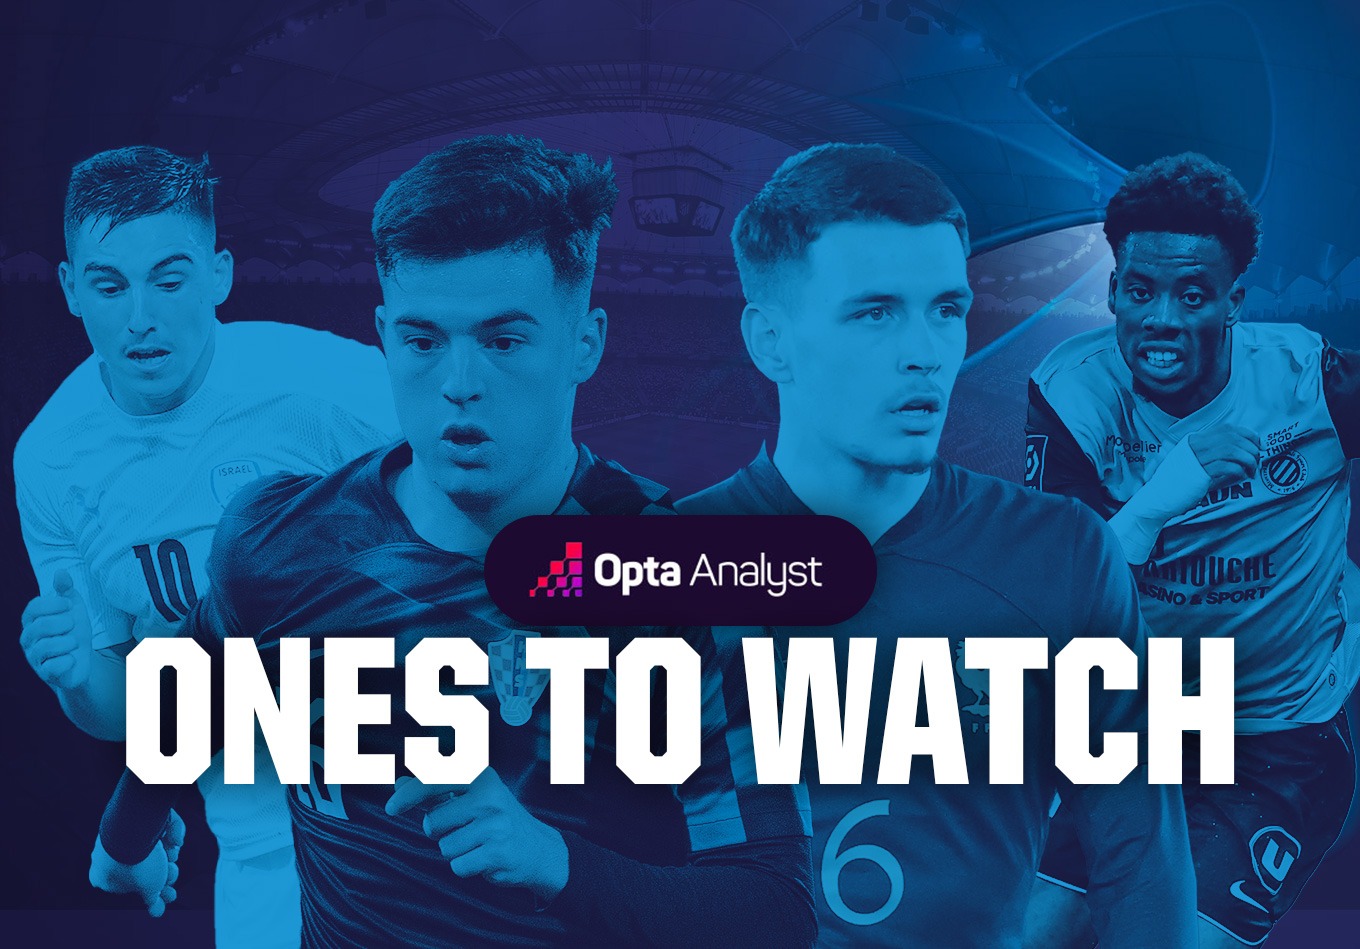 Under-21 European Championship: Players to Watch